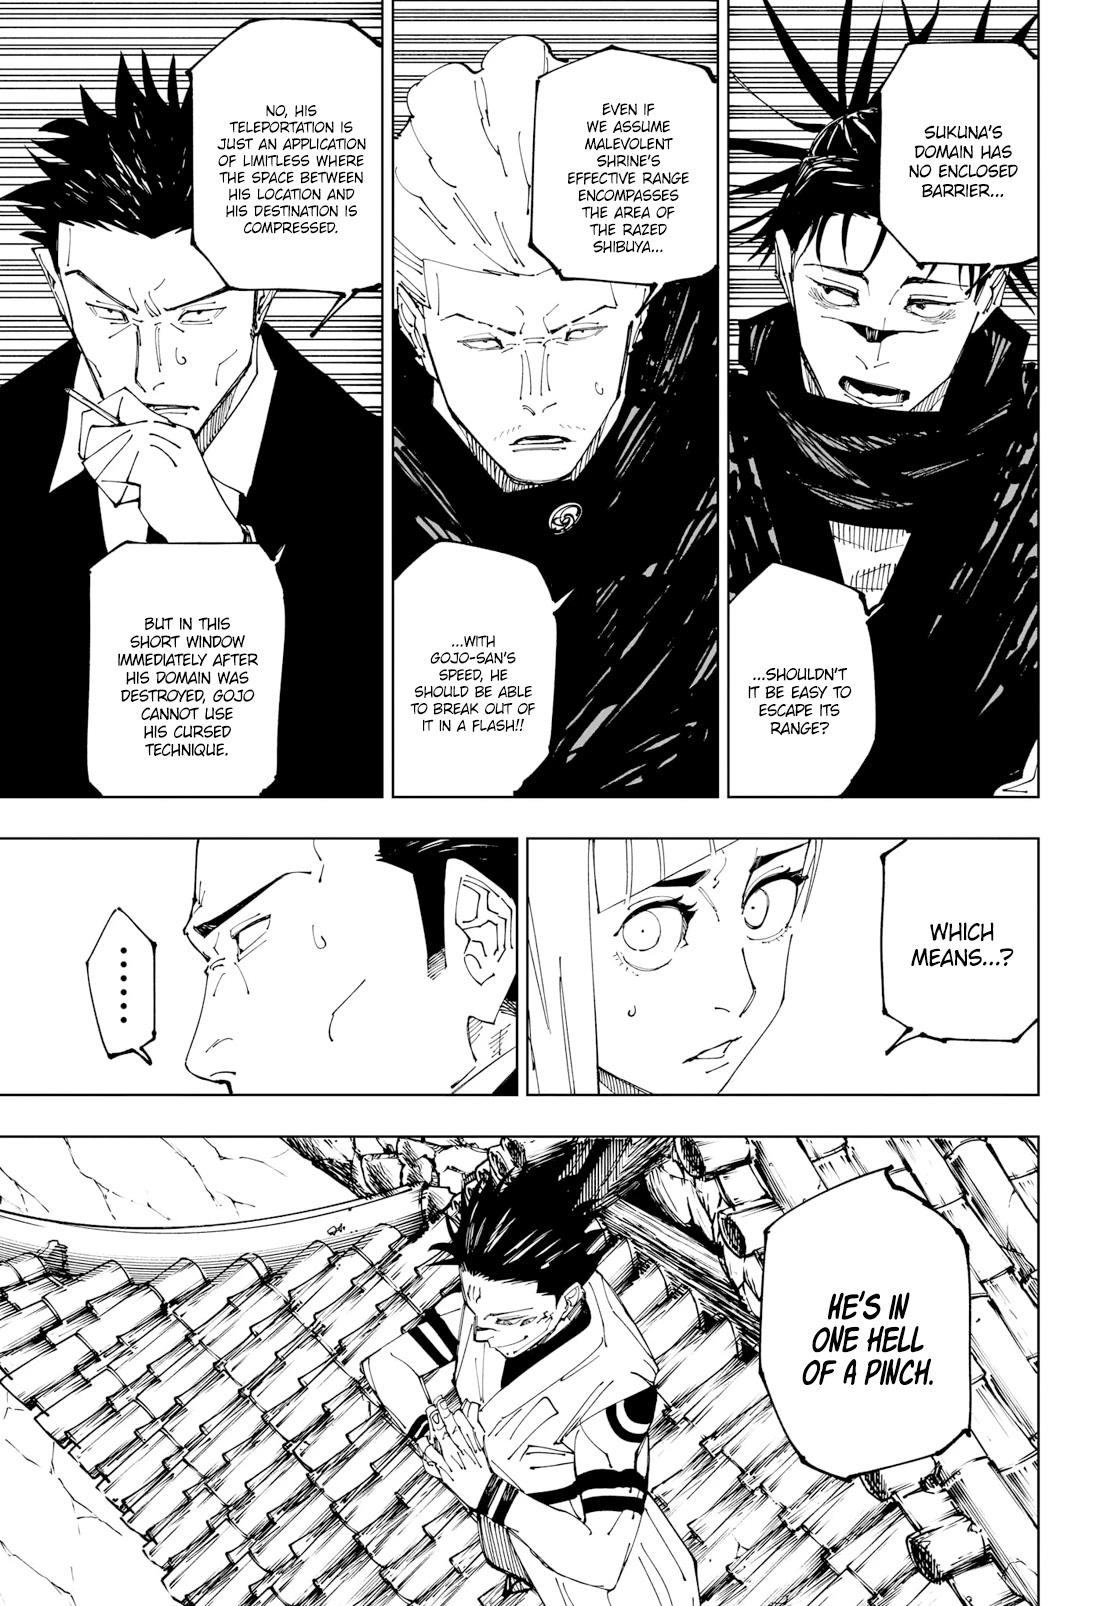 Jujutsu Kaisen Chapter 226: The Decisive Battle In The Uninhabited, Demon-Infested Shinjuku ④ page 4 - Mangakakalot